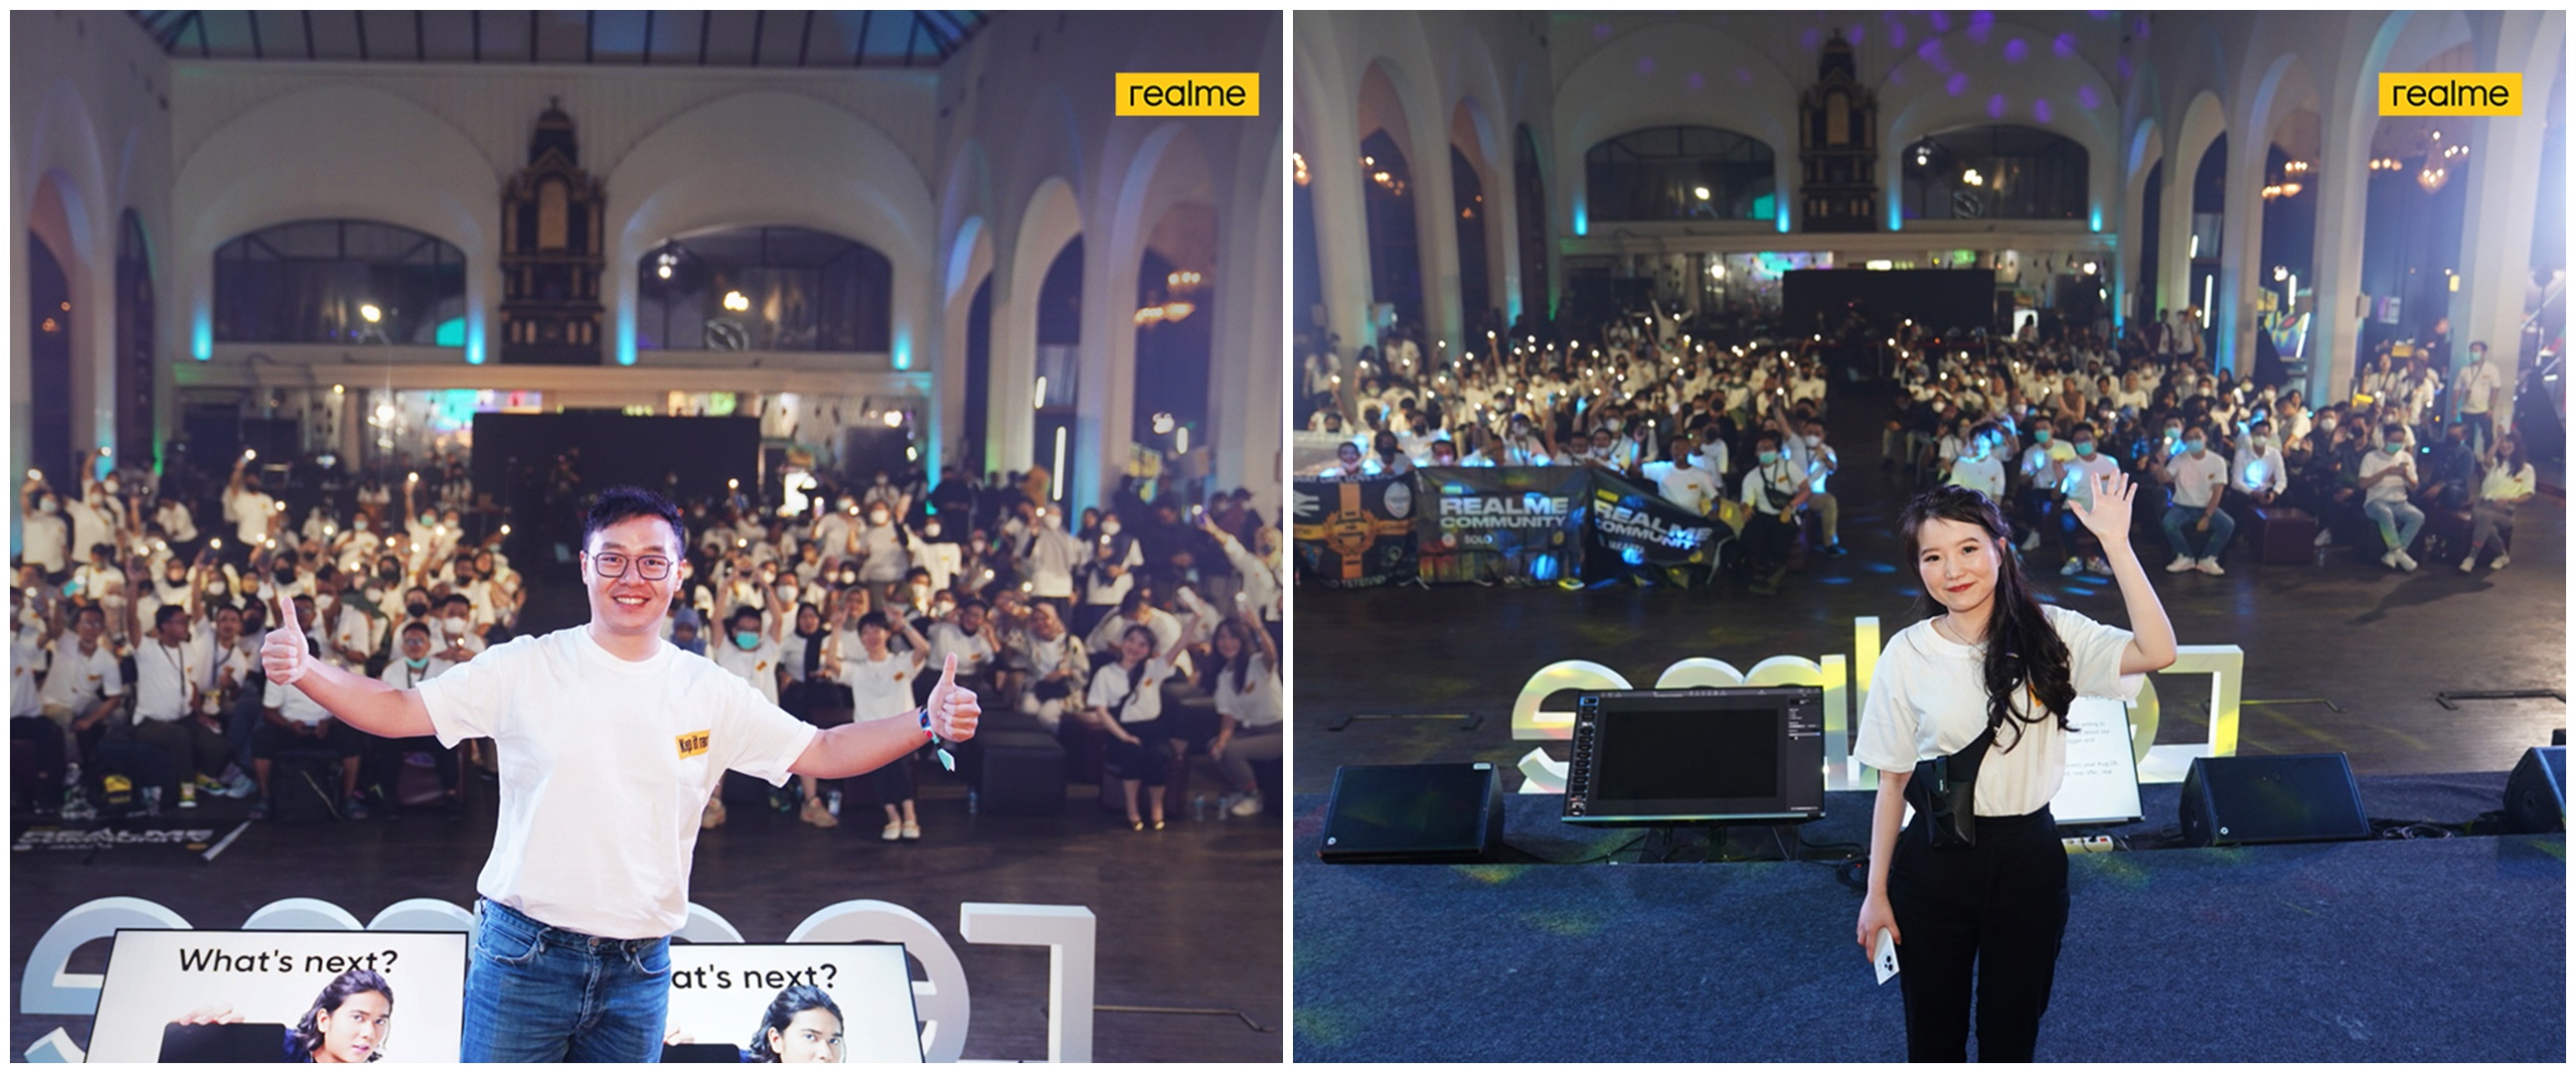 realme 828 Fan Festival siap jadi benchmark acara fans smartphone